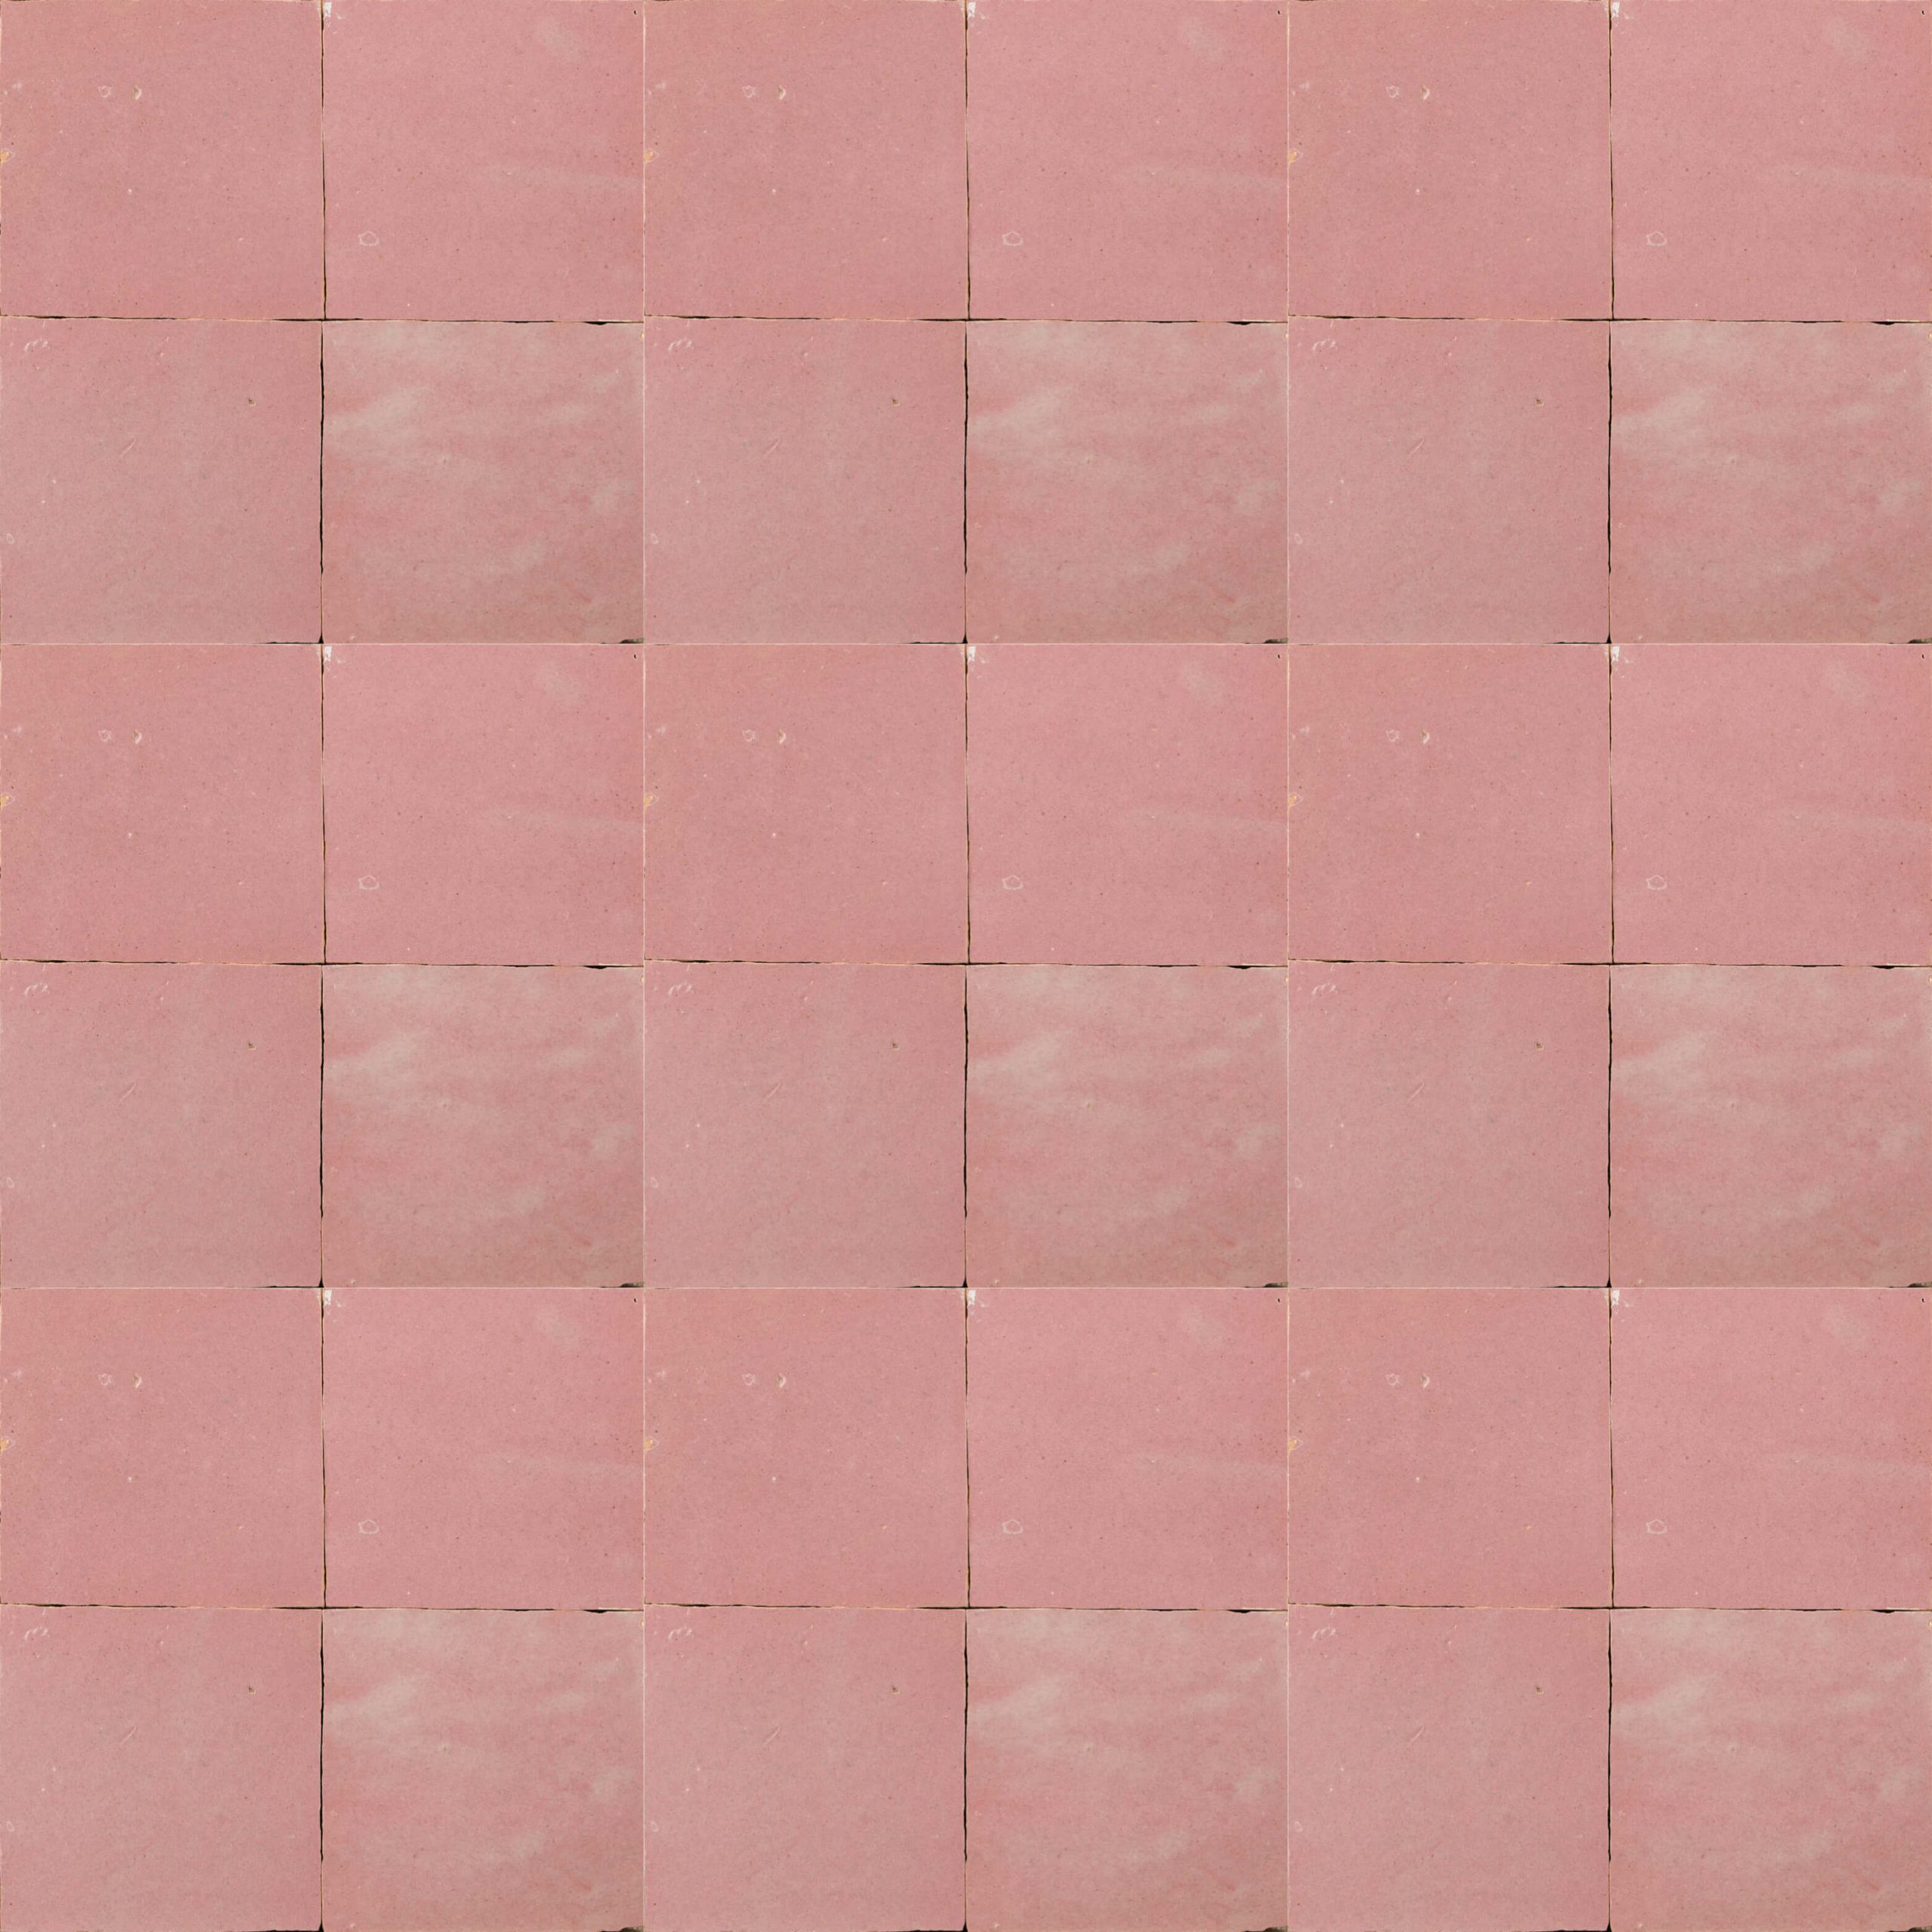 Outdoor Tiles - Blushing Pink Glazed